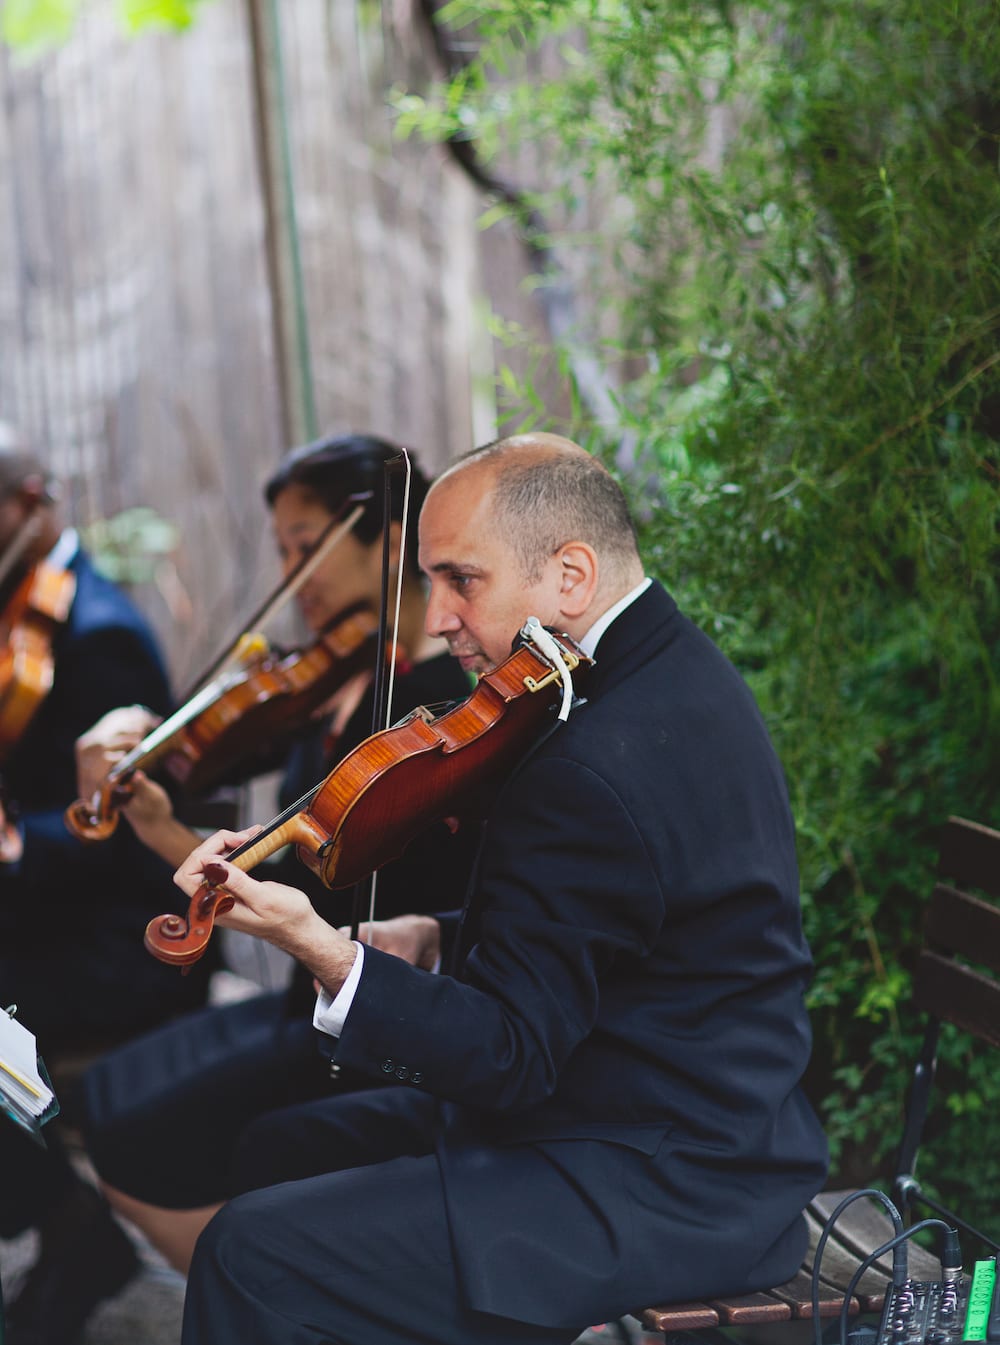 Wedding String Quartet NYC